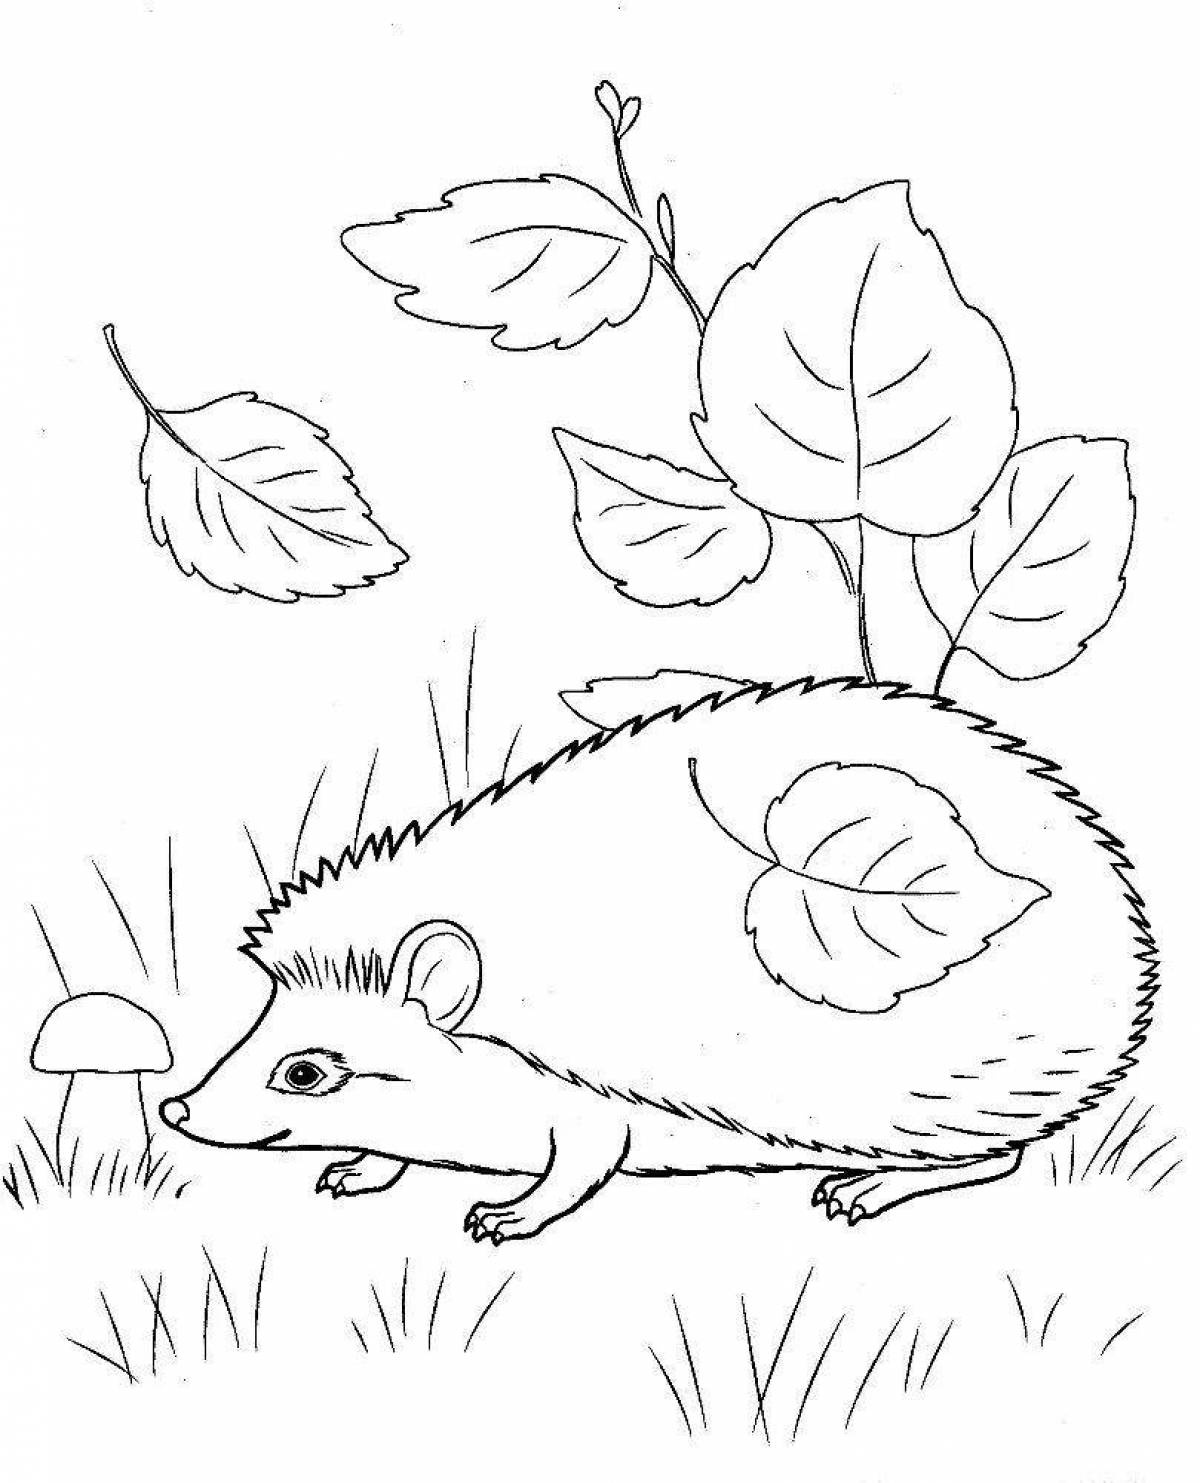 Creative hedgehog drawing for kids